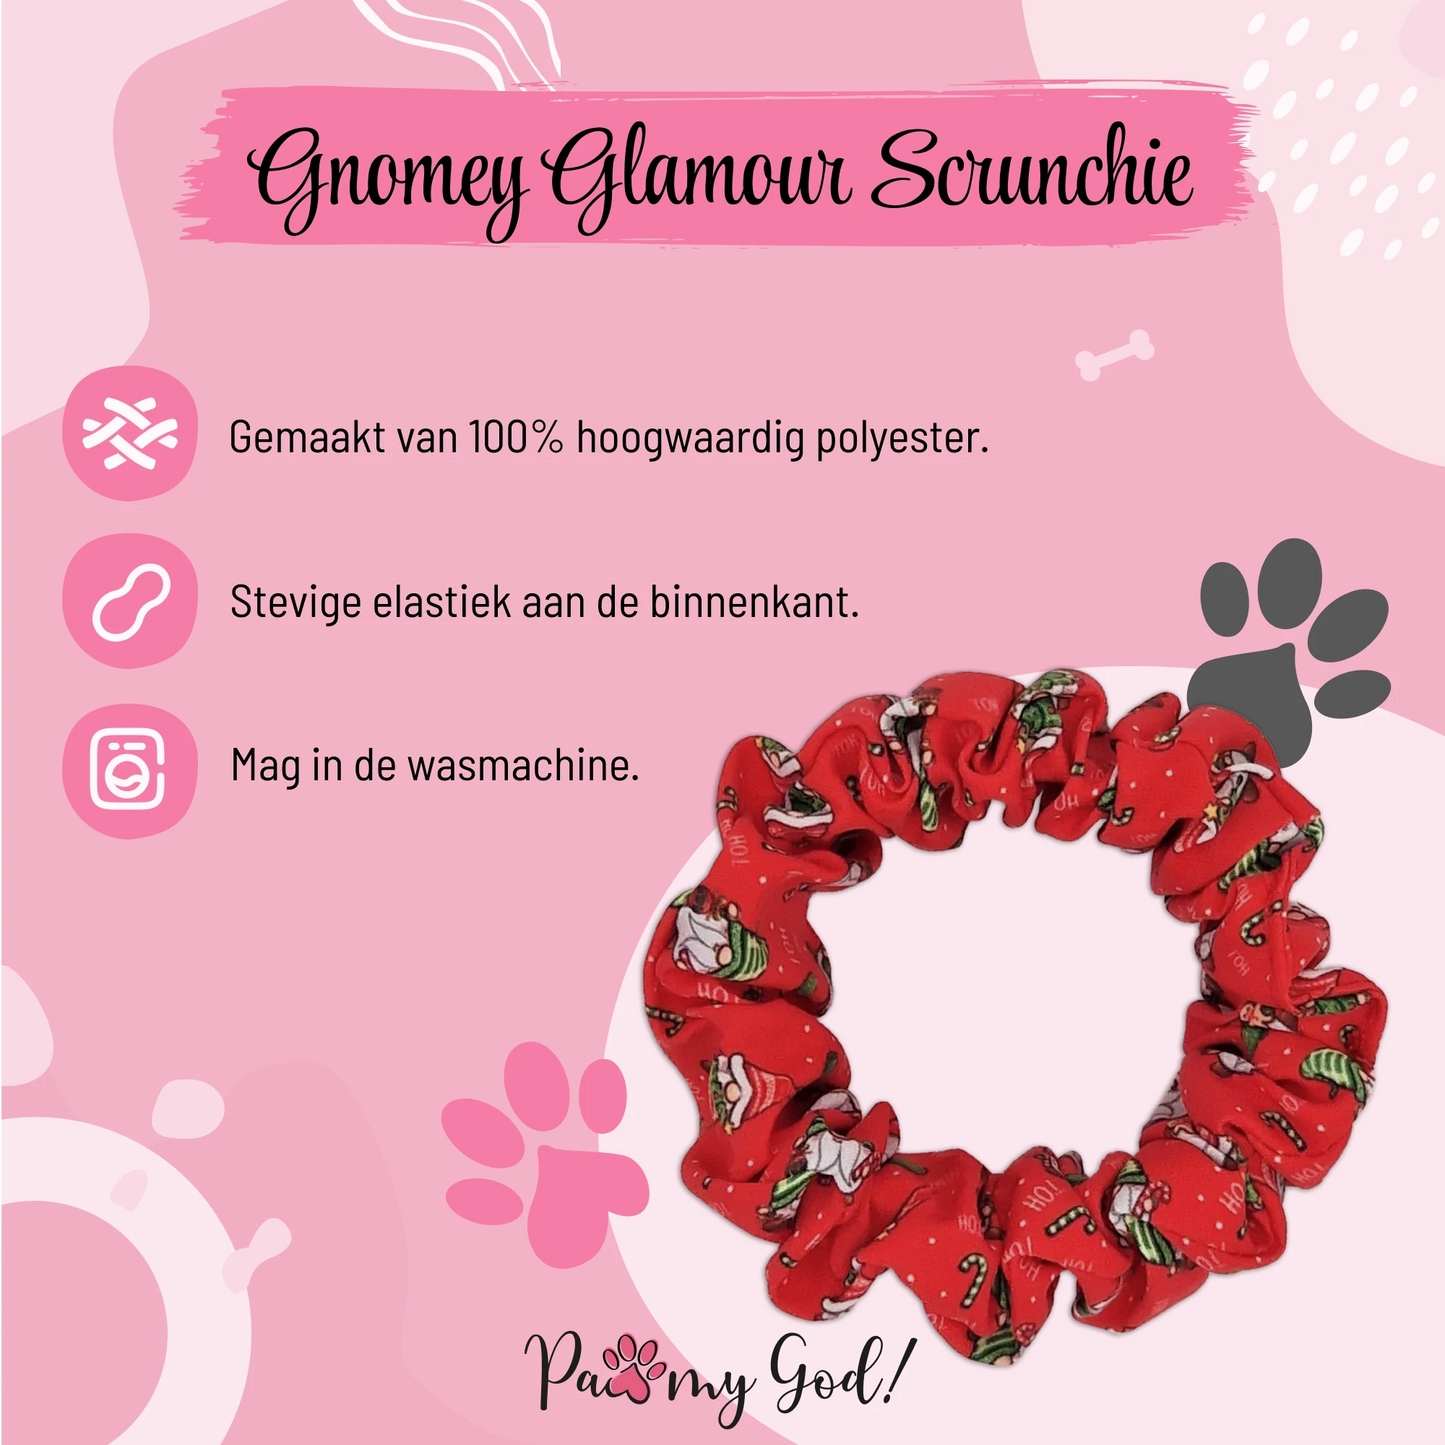 Gnomey Glamour Scrunchie